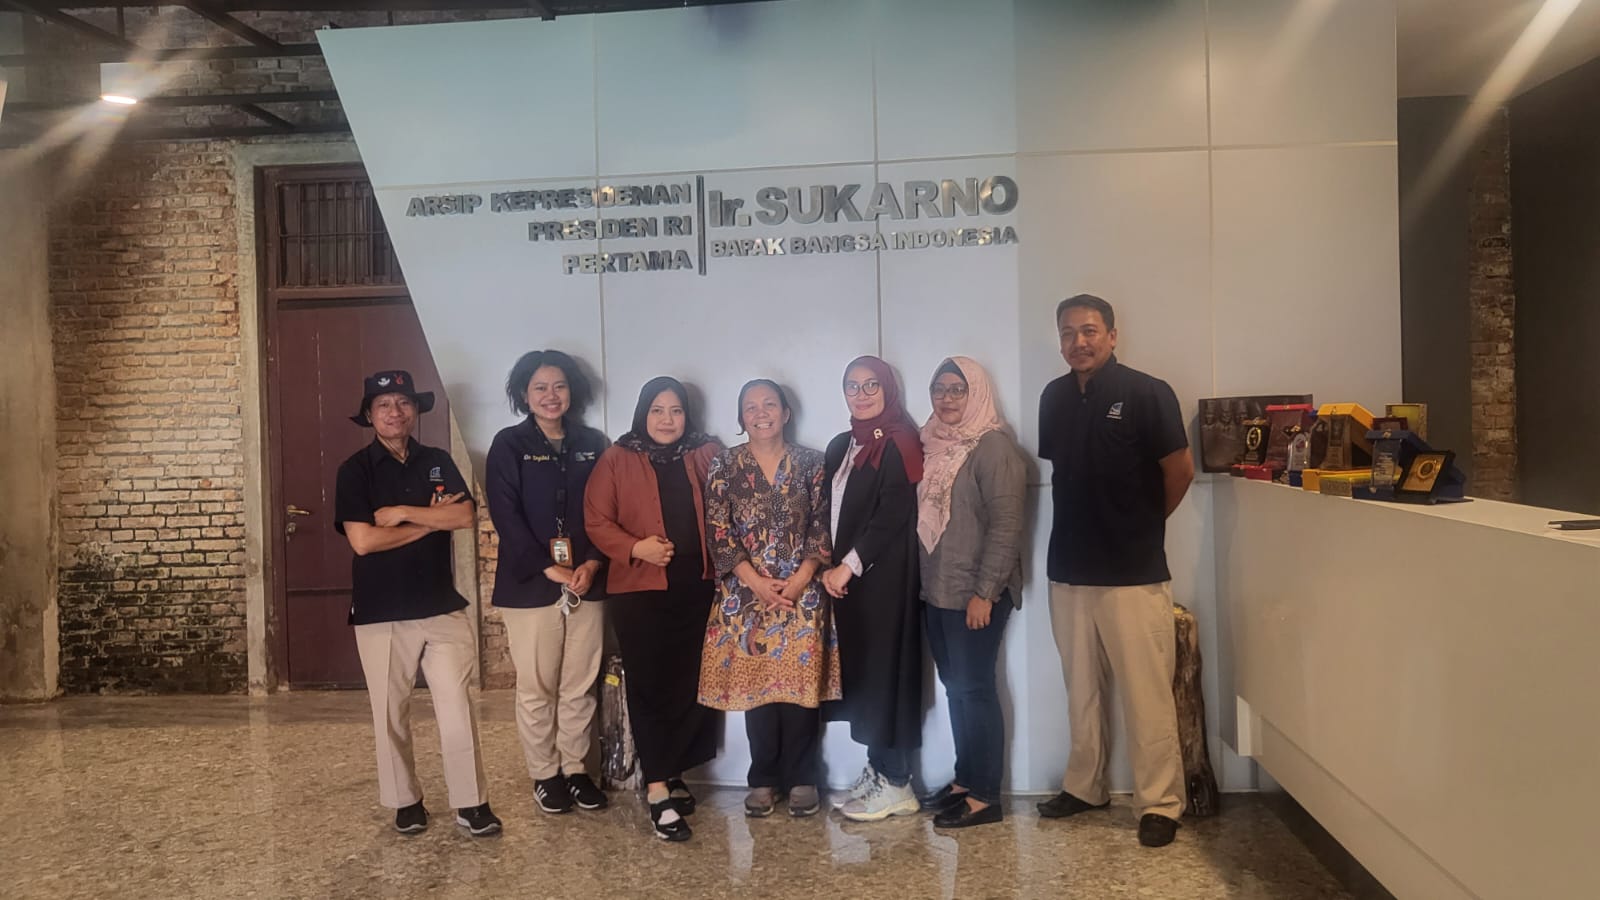 BKKBN Kepulauan Riau Kunjungi Pameran Arsip Tetap Presiden Pertama Ir. Sukarno